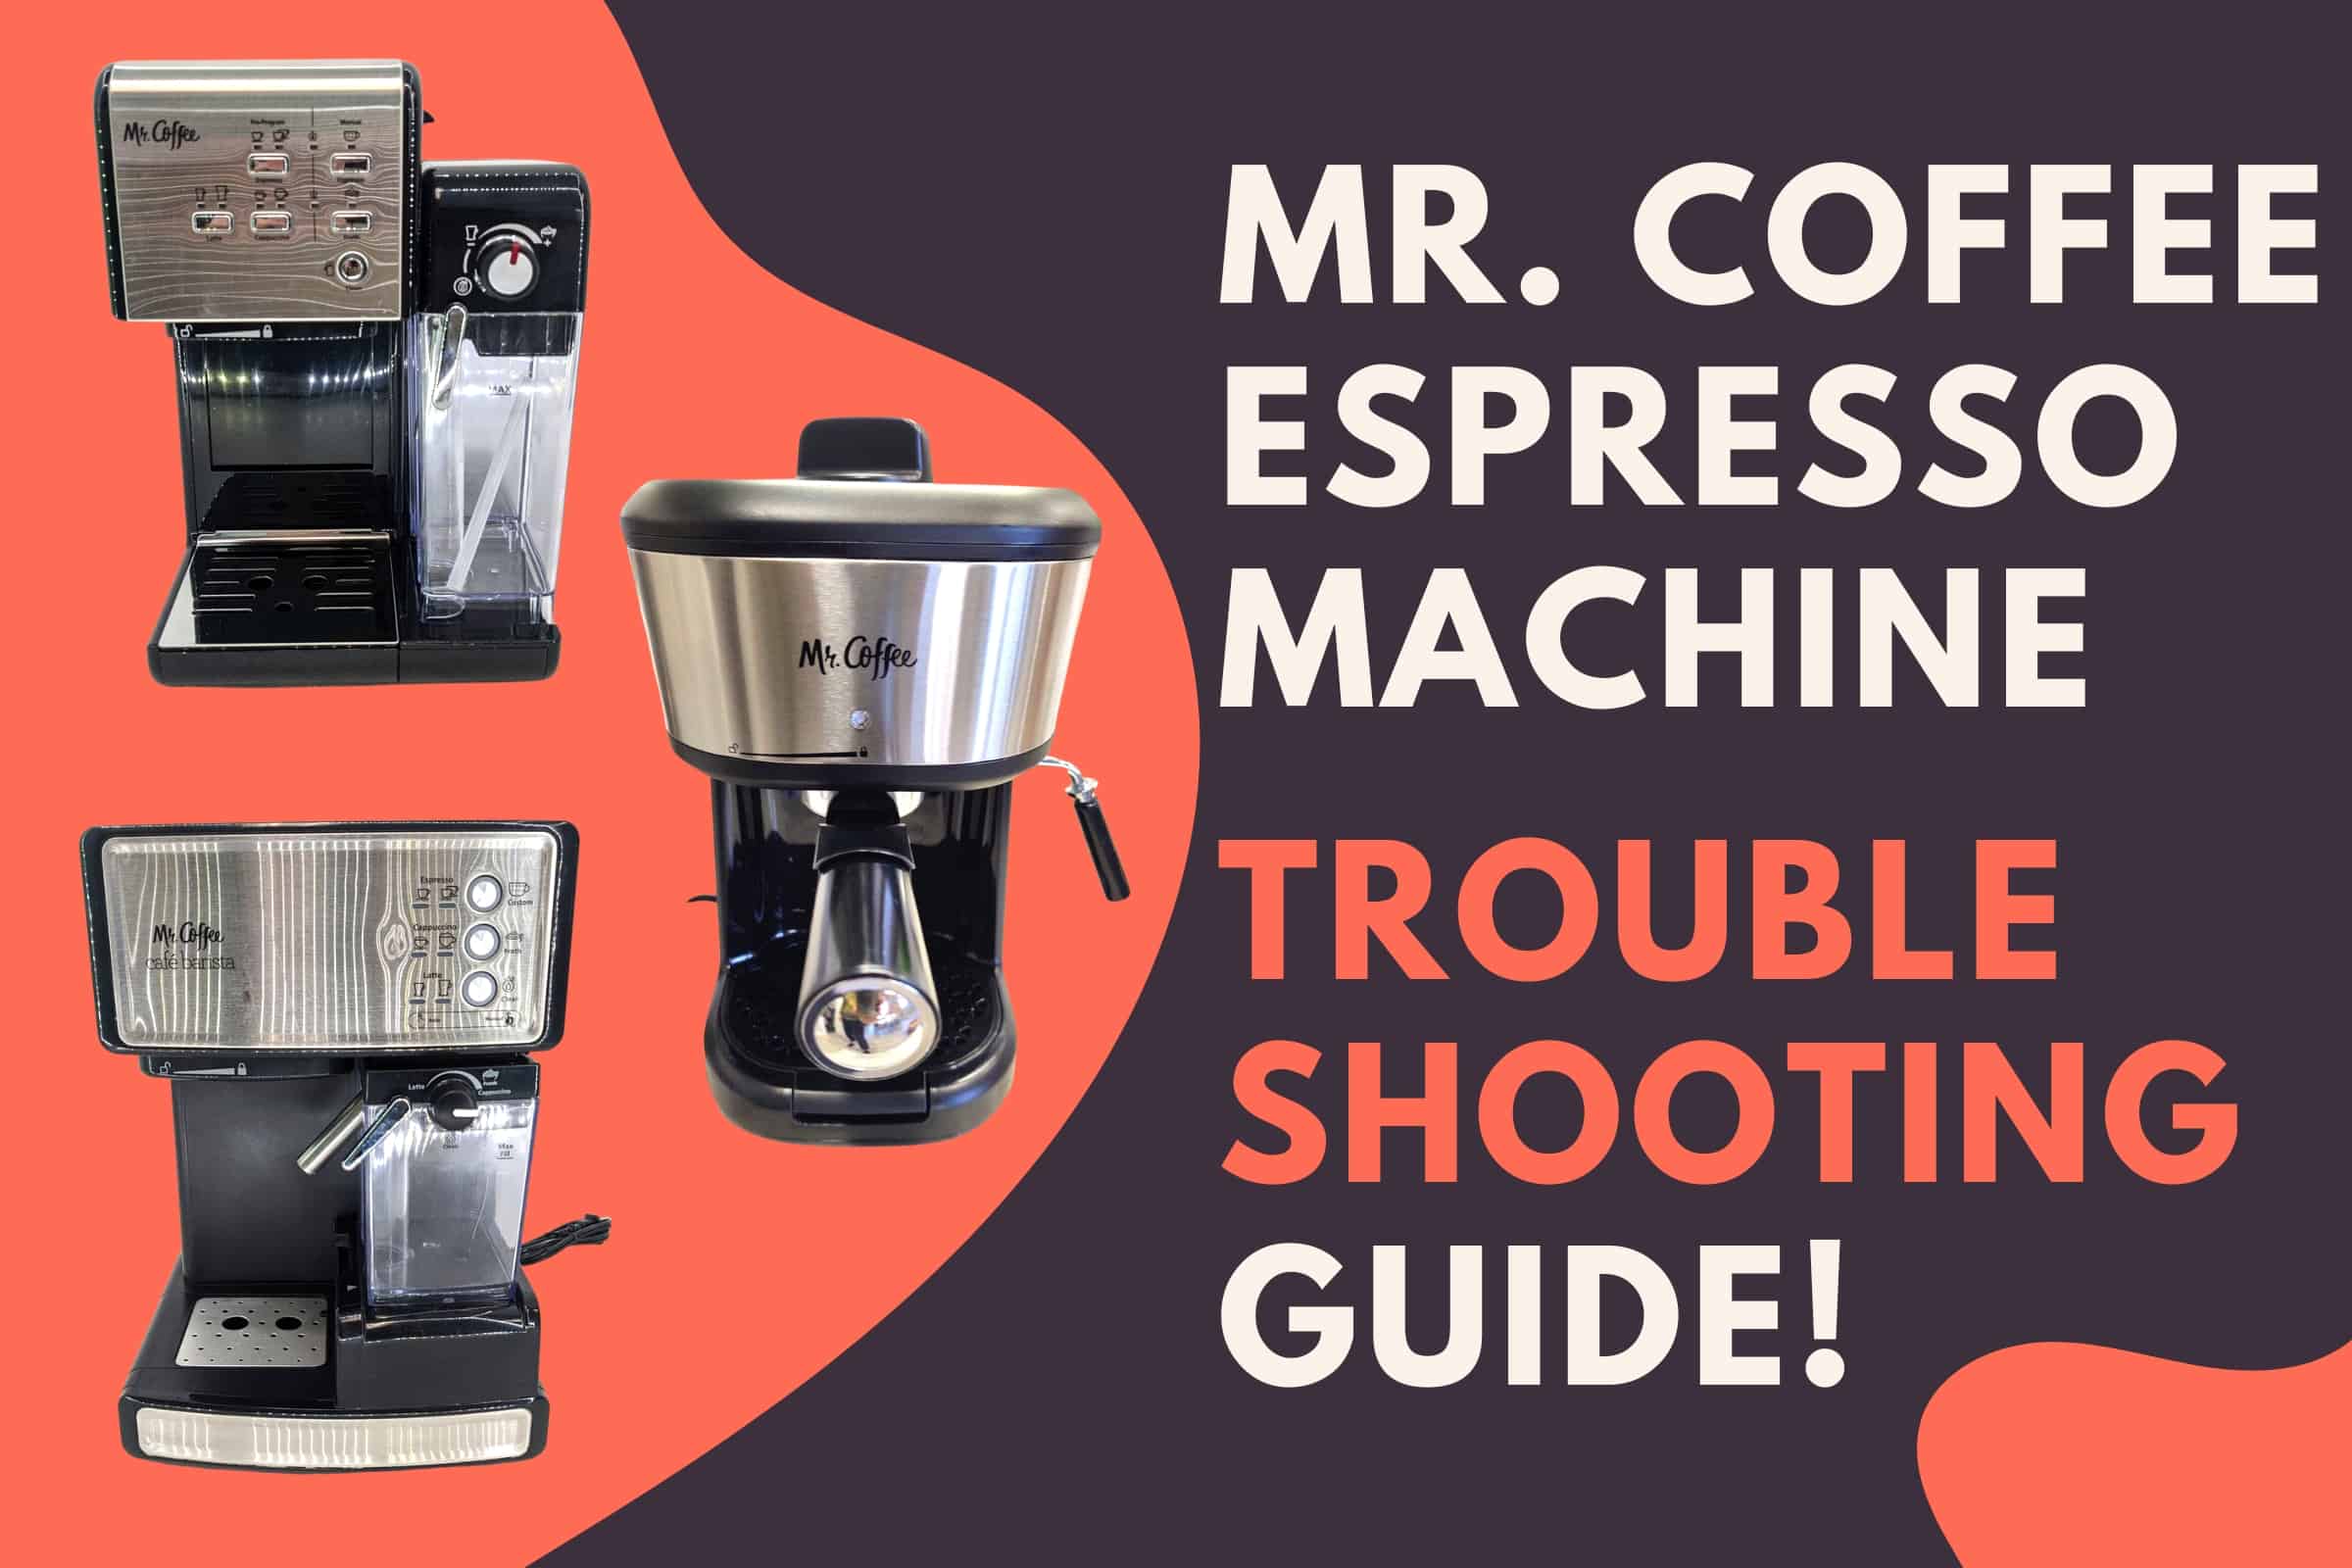 mr. coffee espresso machine cafe barista troubleshooting guide